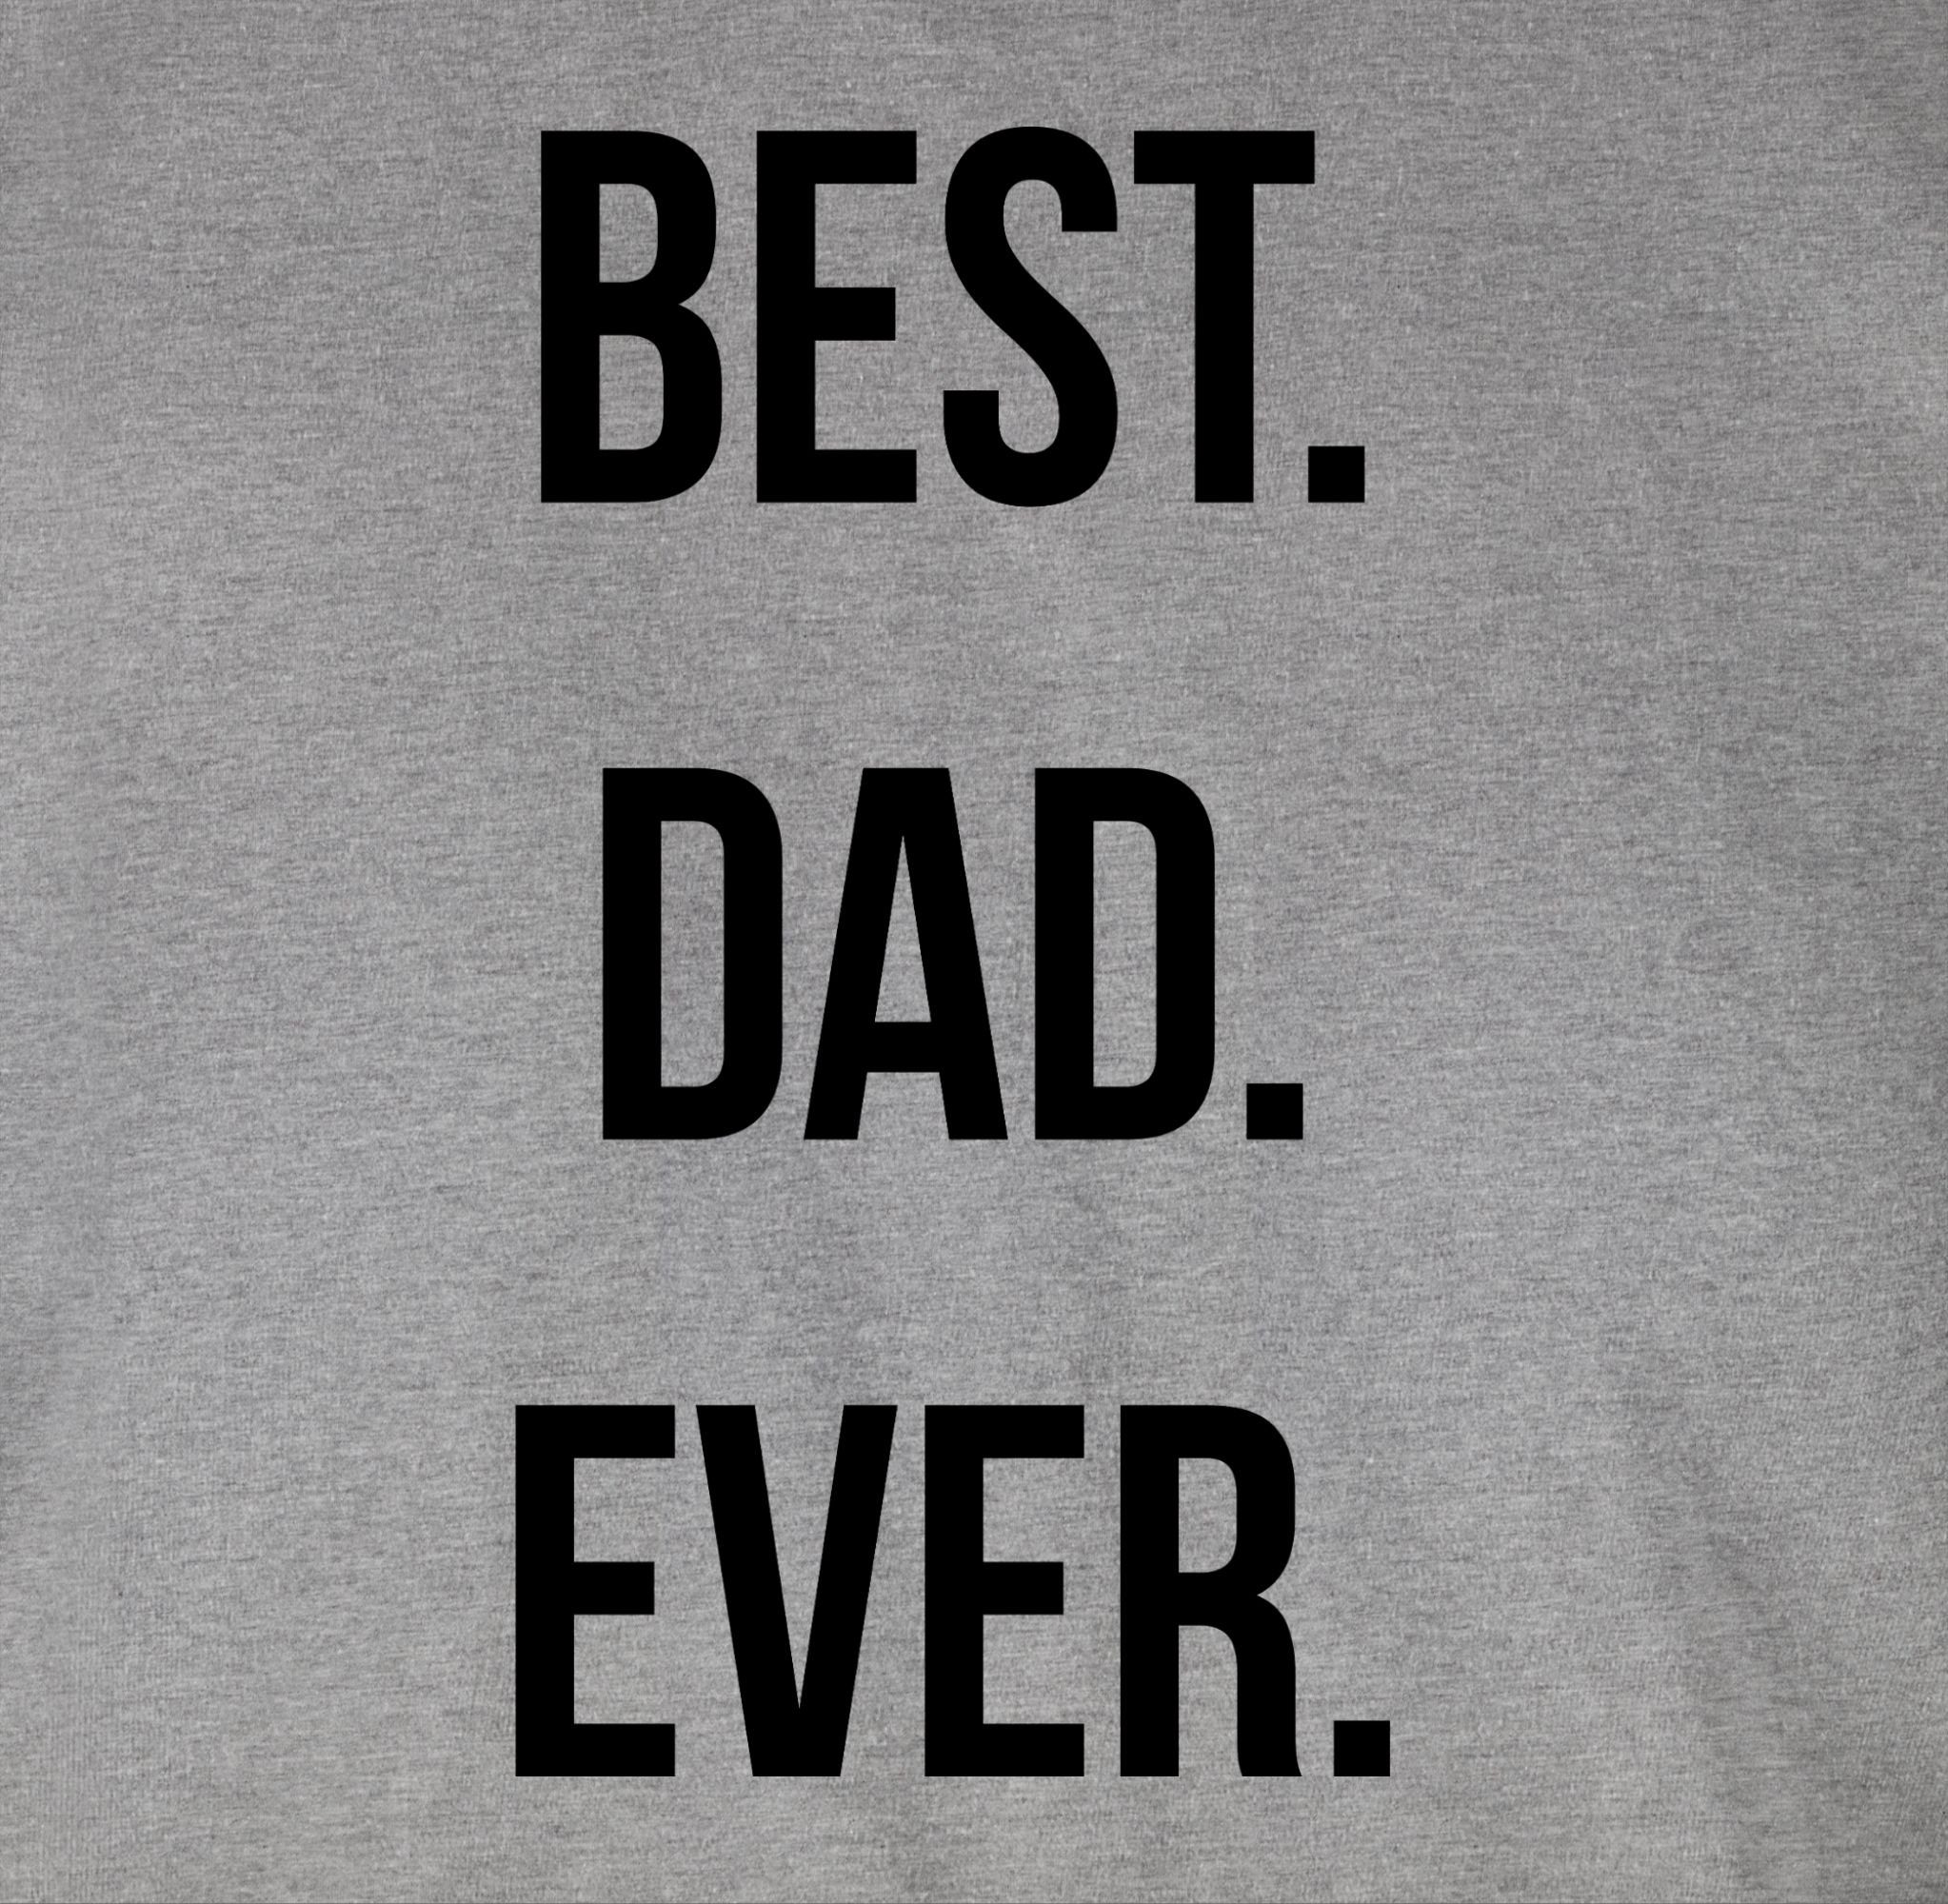 T-Shirt für Best Grau meliert 1 Dad Shirtracer Geschenk Ever Papa Vatertag